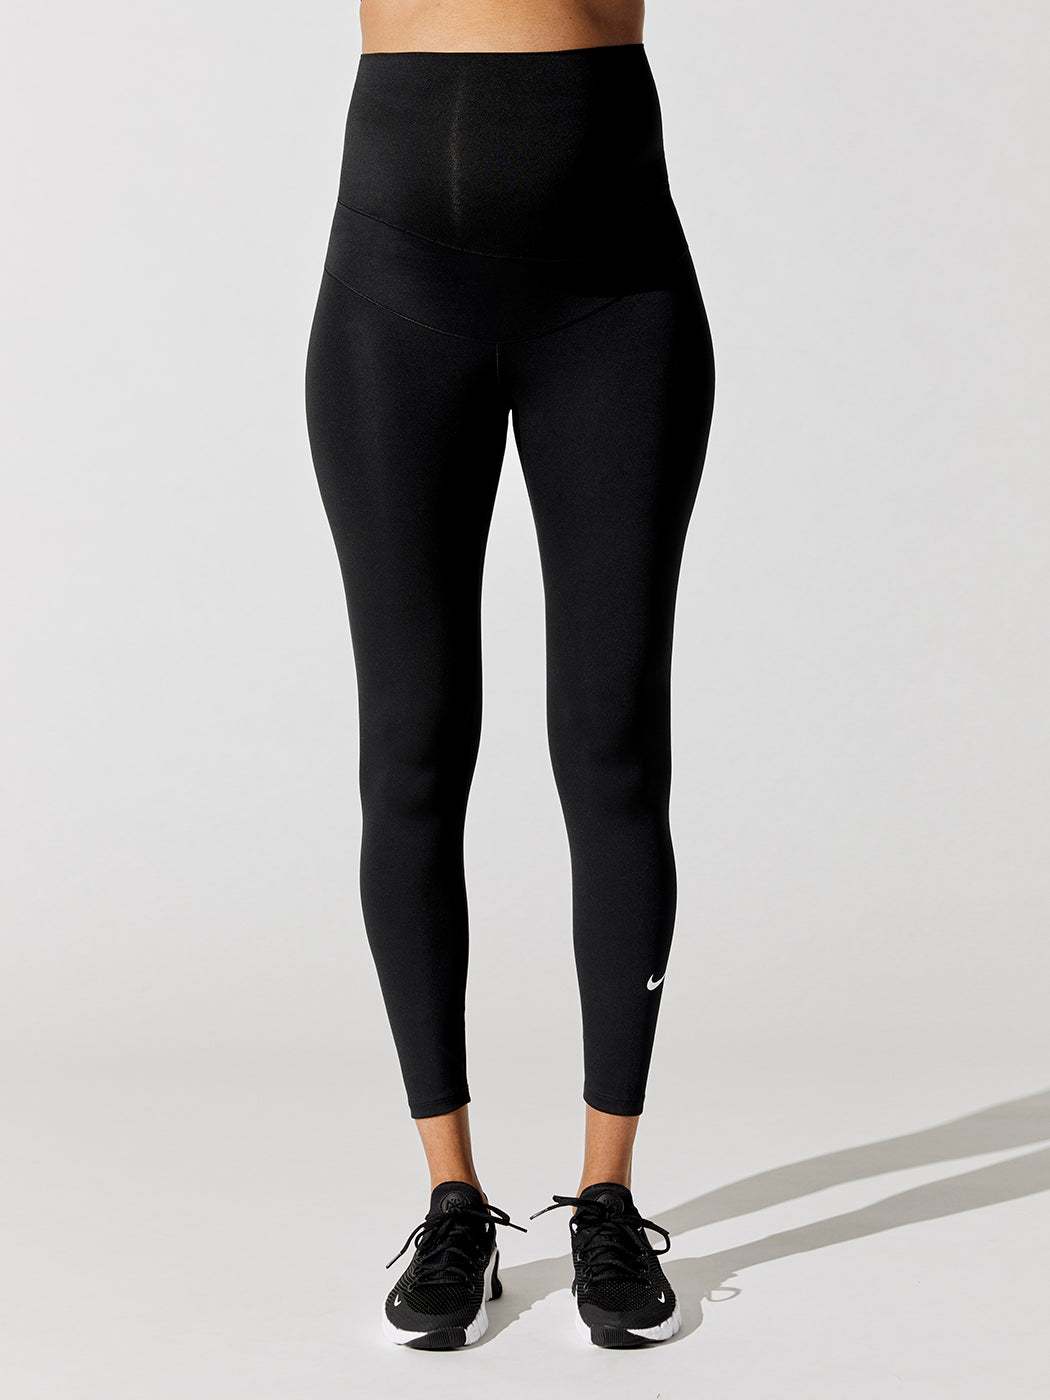 Nike Maternity One Dri-Fit leggings in black